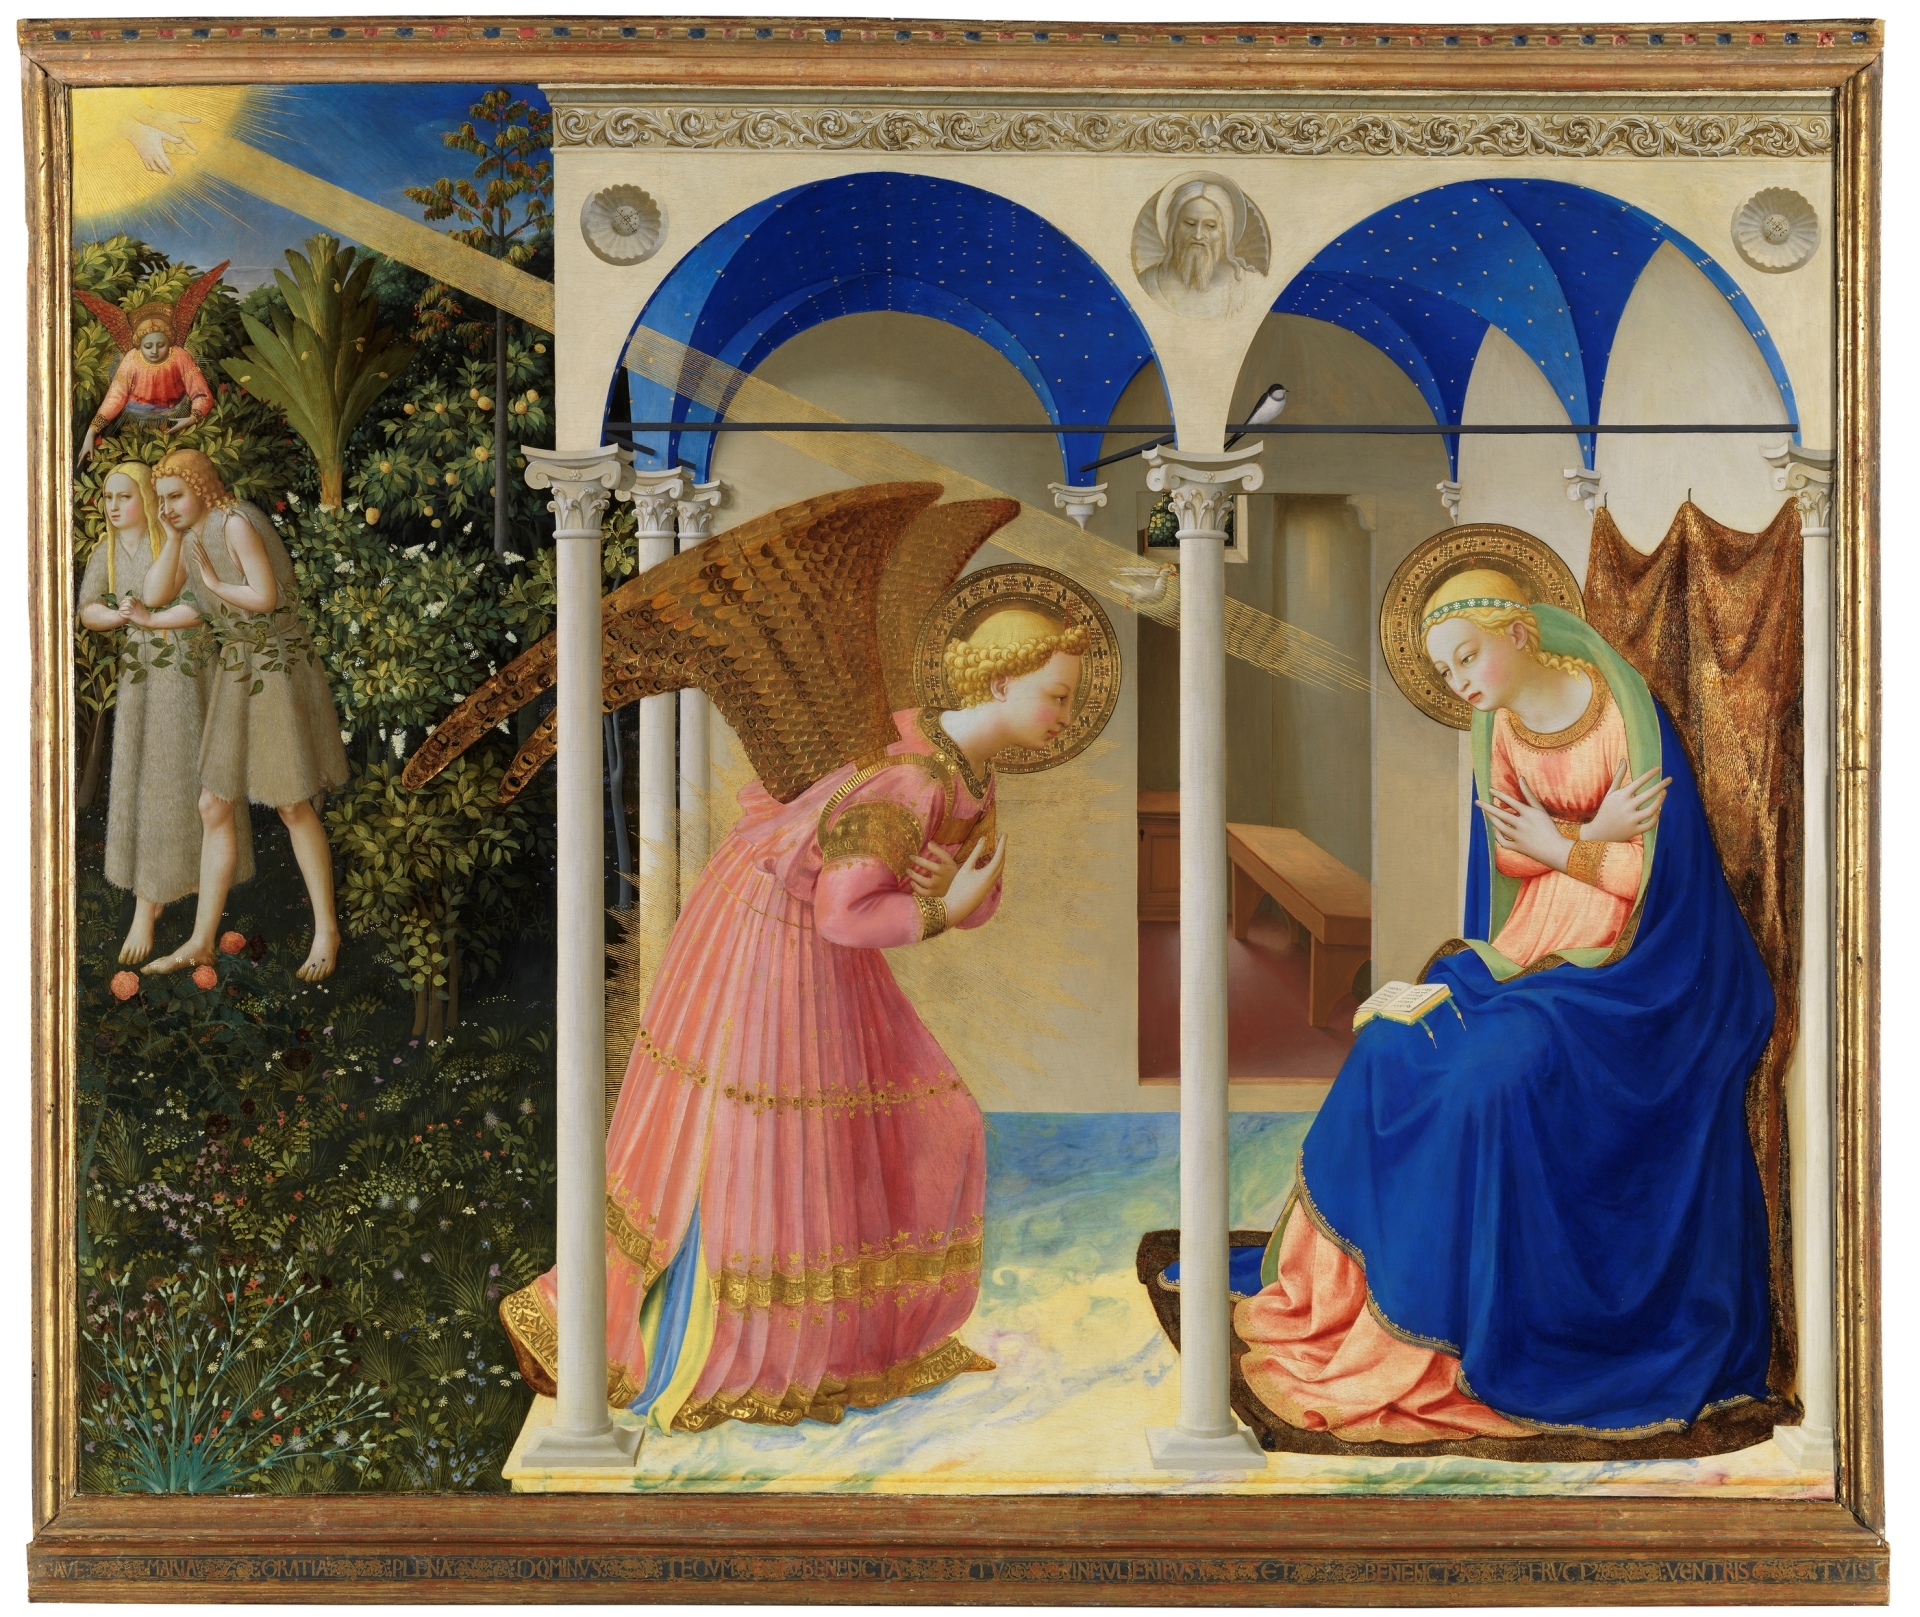 L'Annunciazione by Fra Angelico - 1426 circa - 162,3 x 191,5 cm 